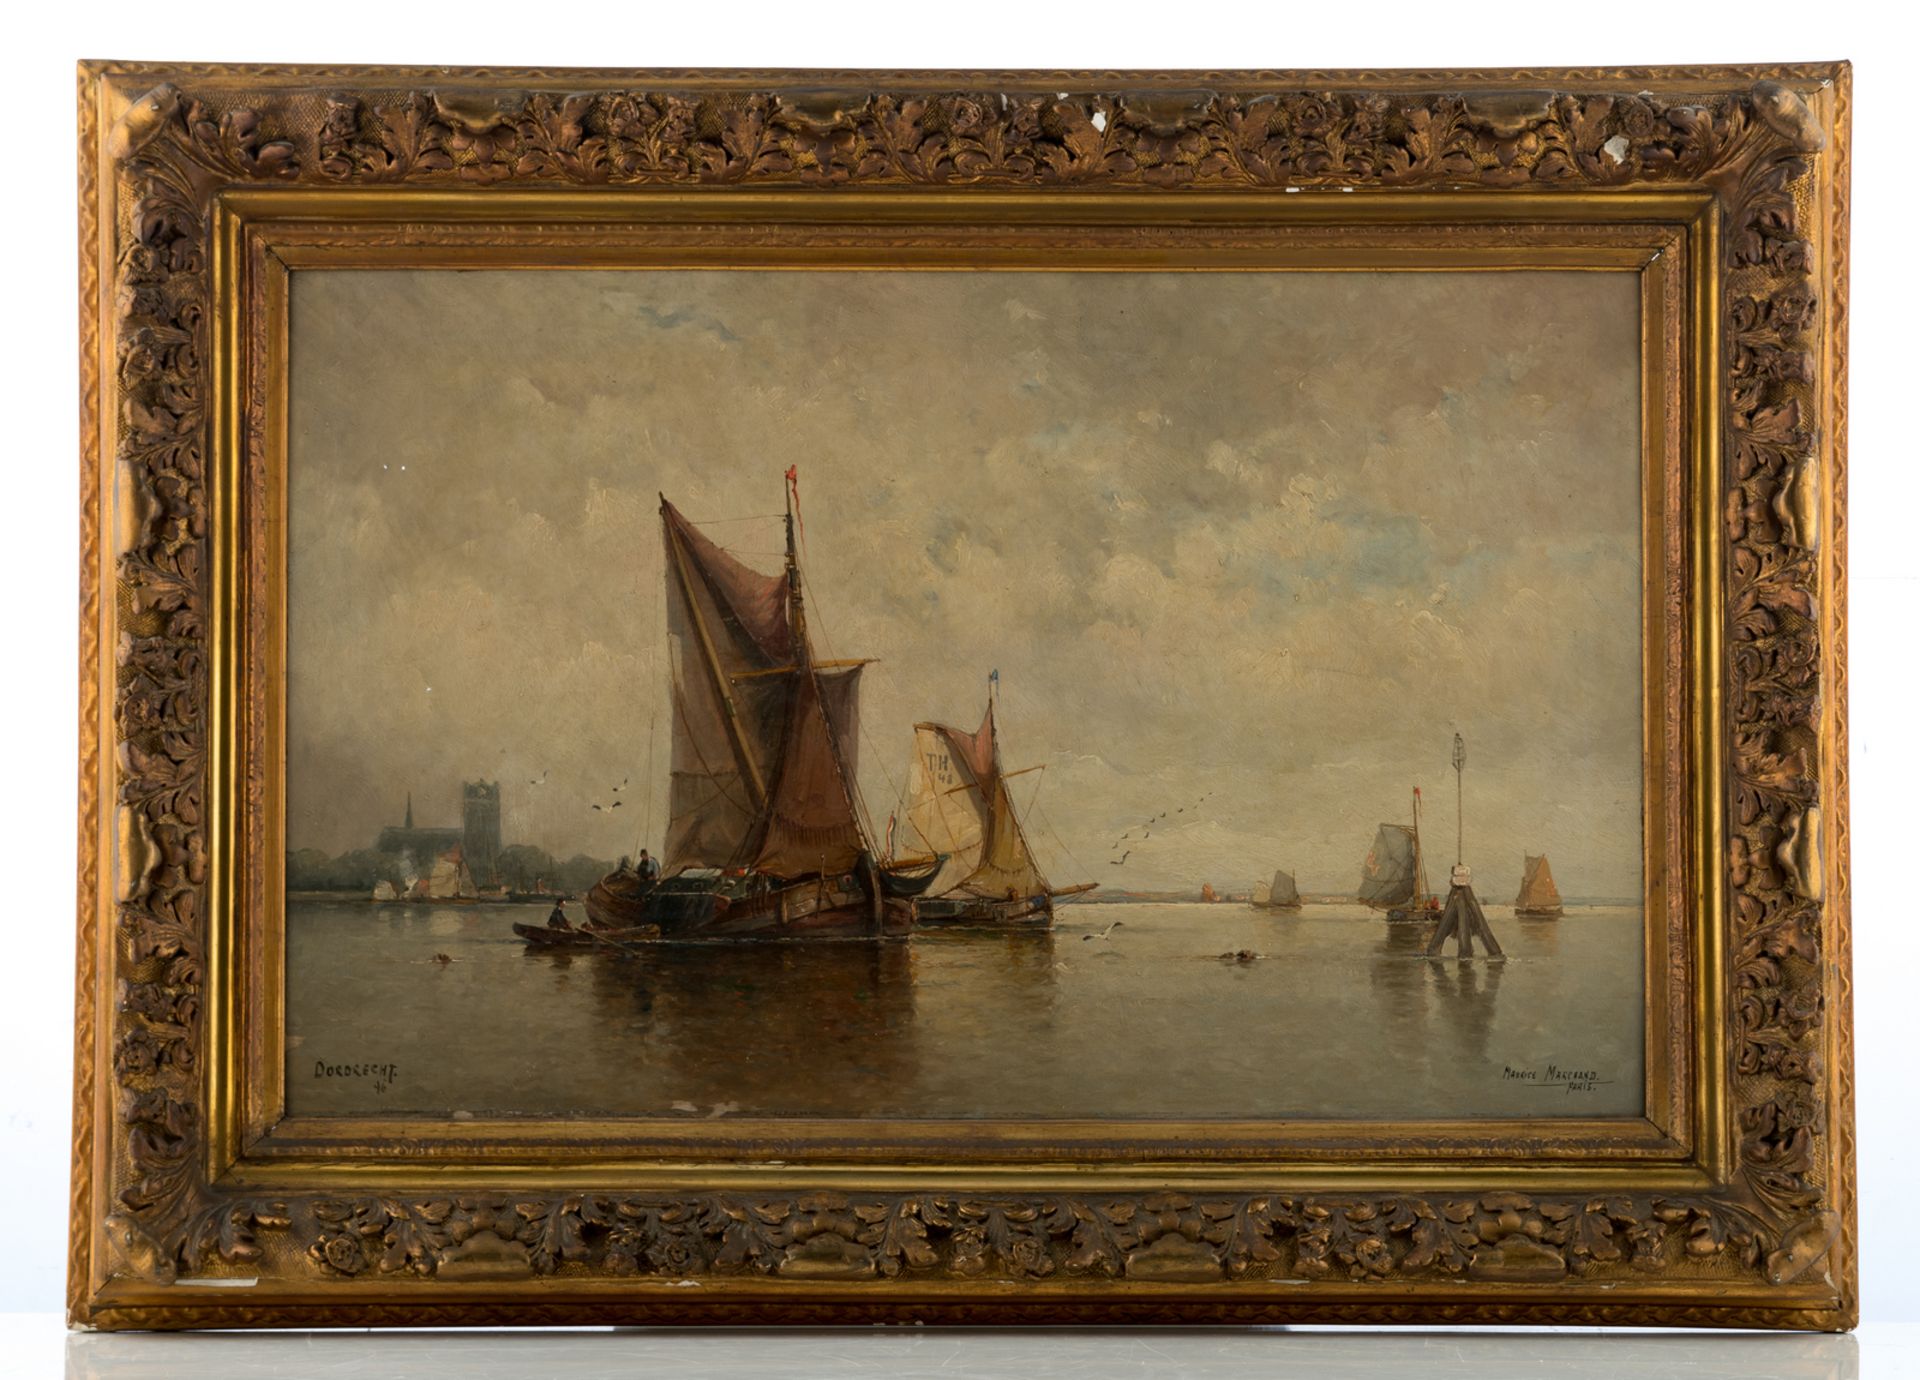 Marchand M., 'Dordrecht', oil on canvas, dated (18)96, 50 x 80 cm - Bild 2 aus 5